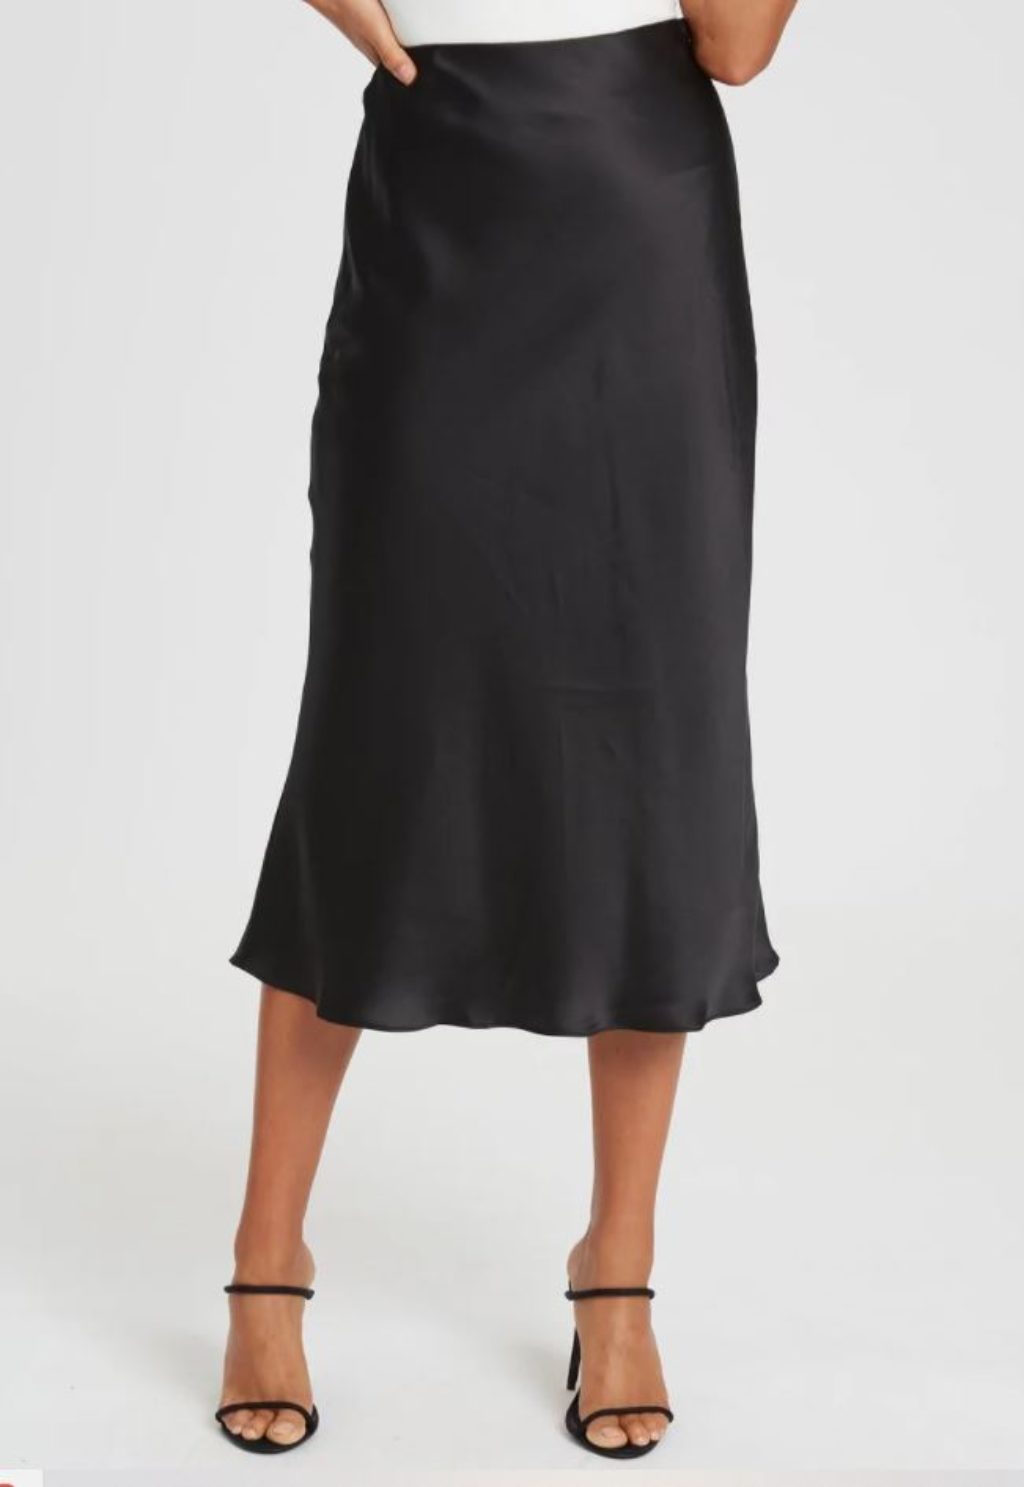 Black Beauty Midi Skirt | The Style Capsule